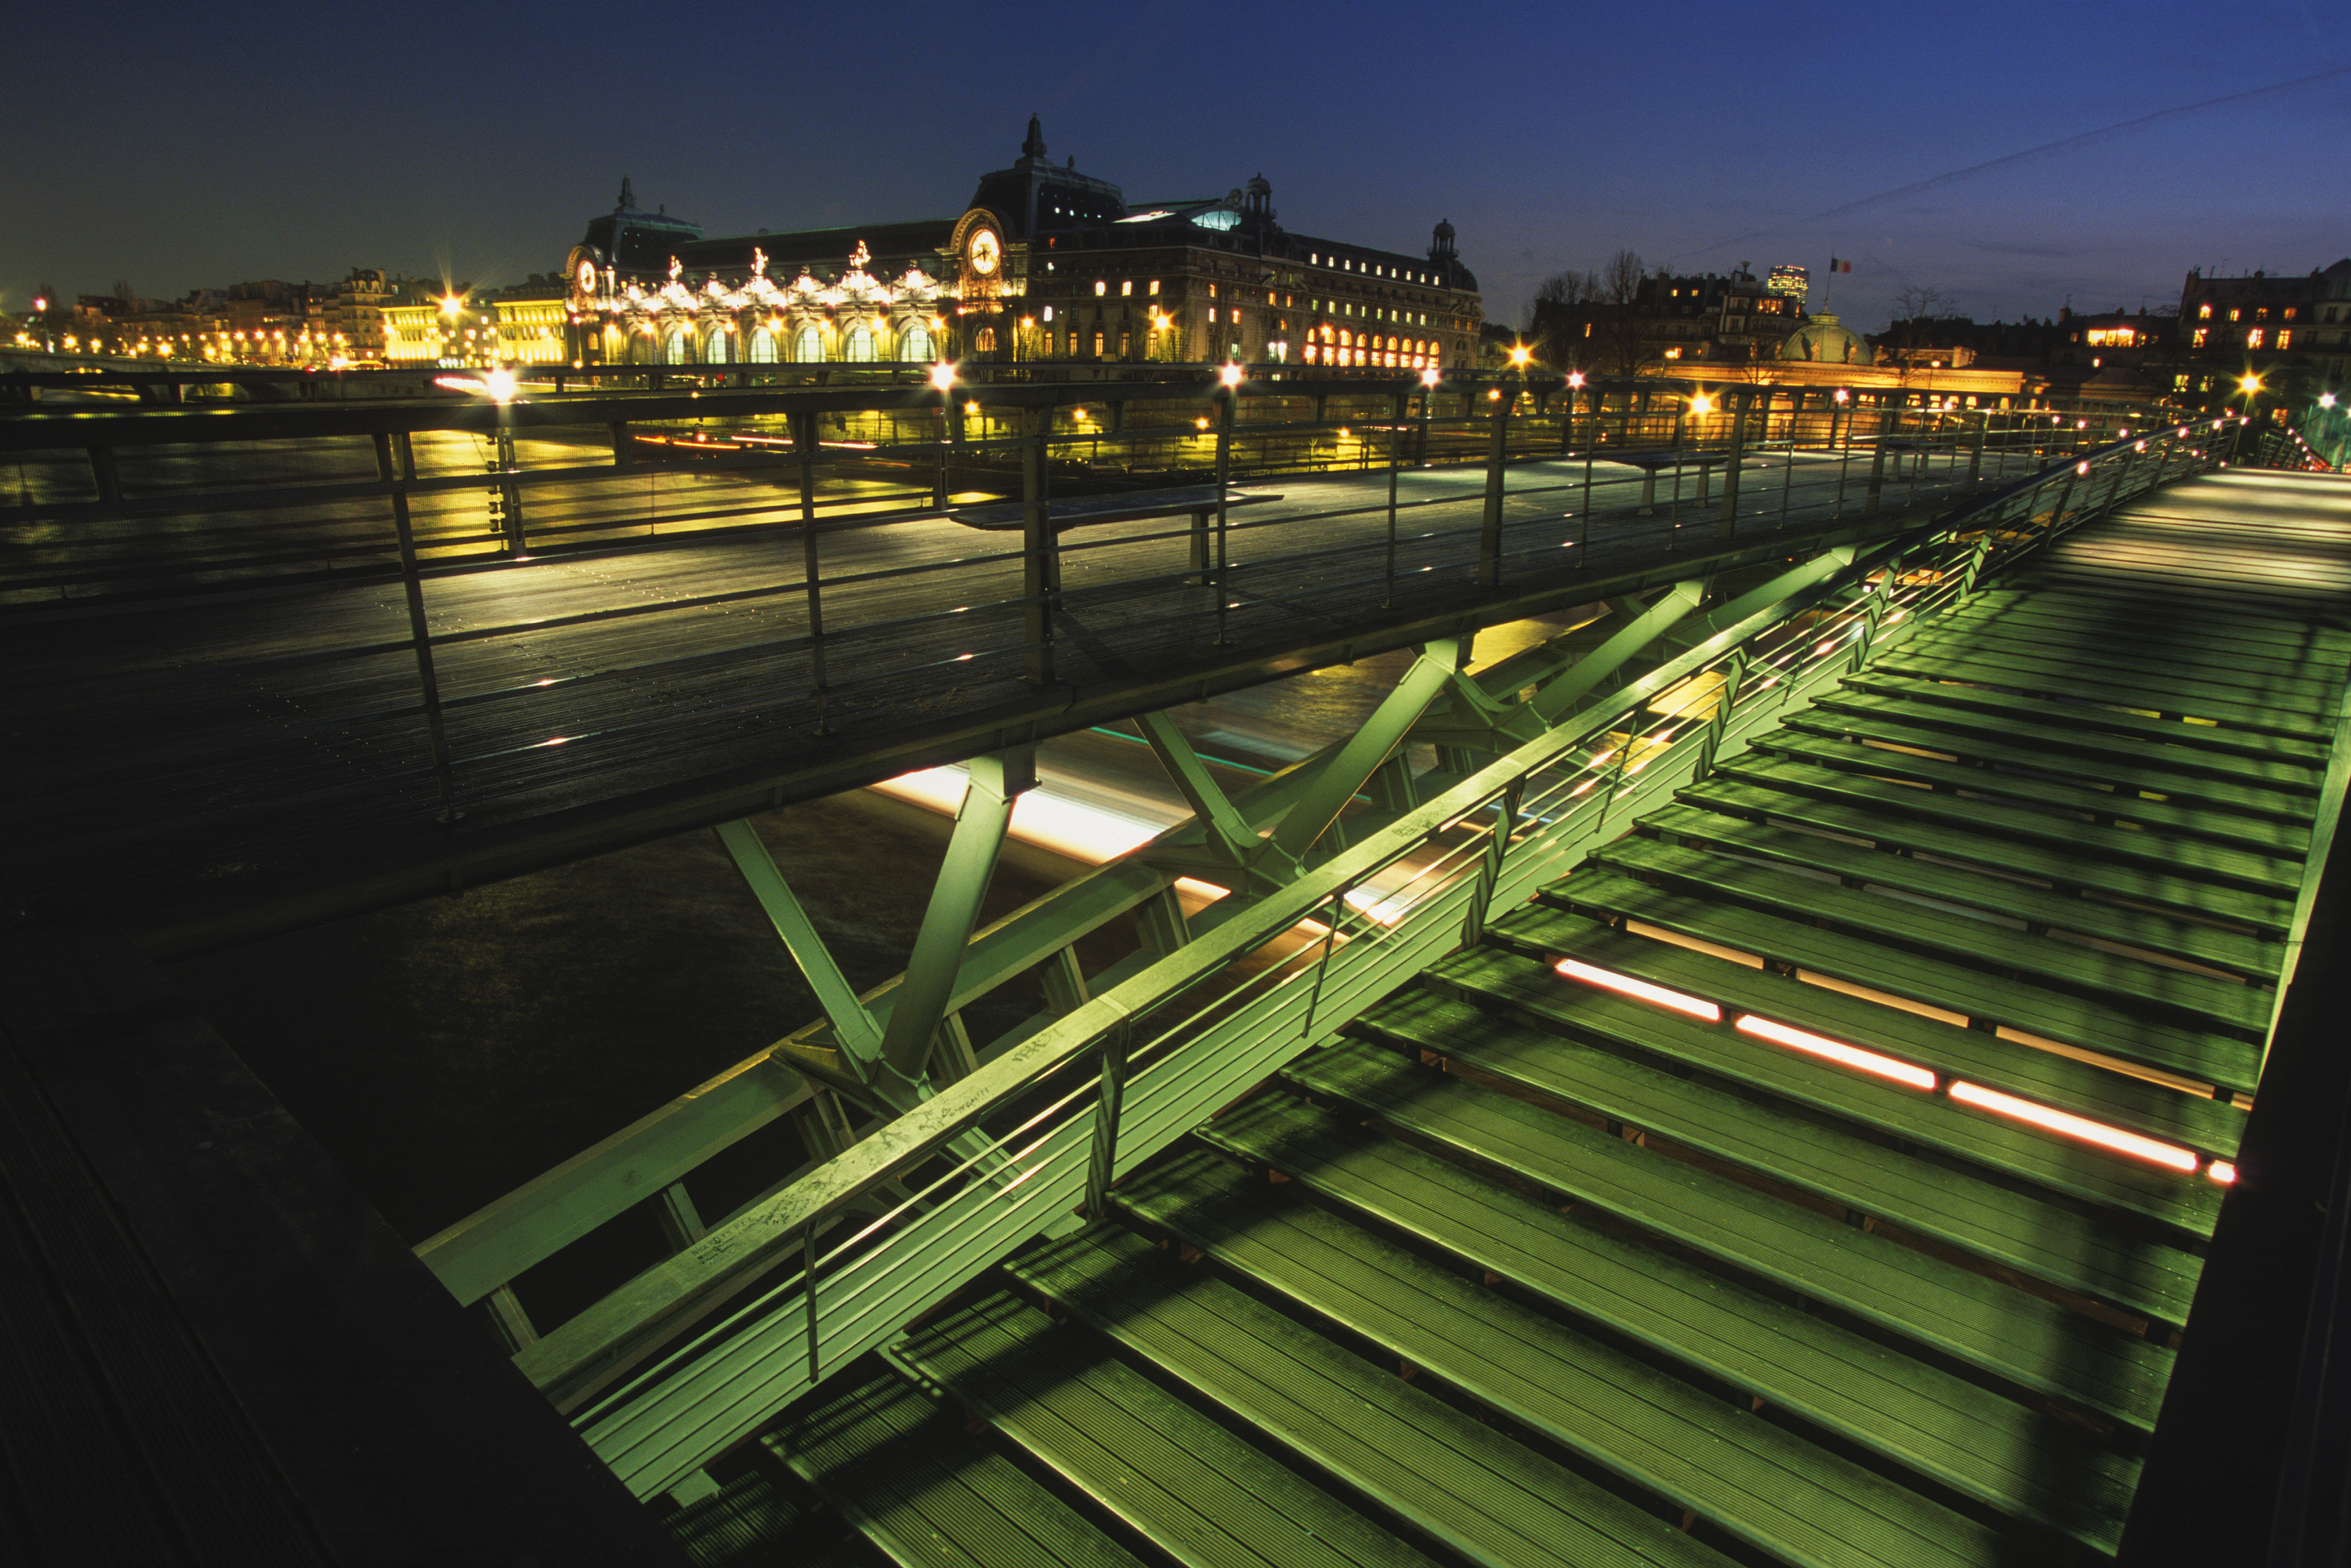 Passerelles des arts bridge Paris